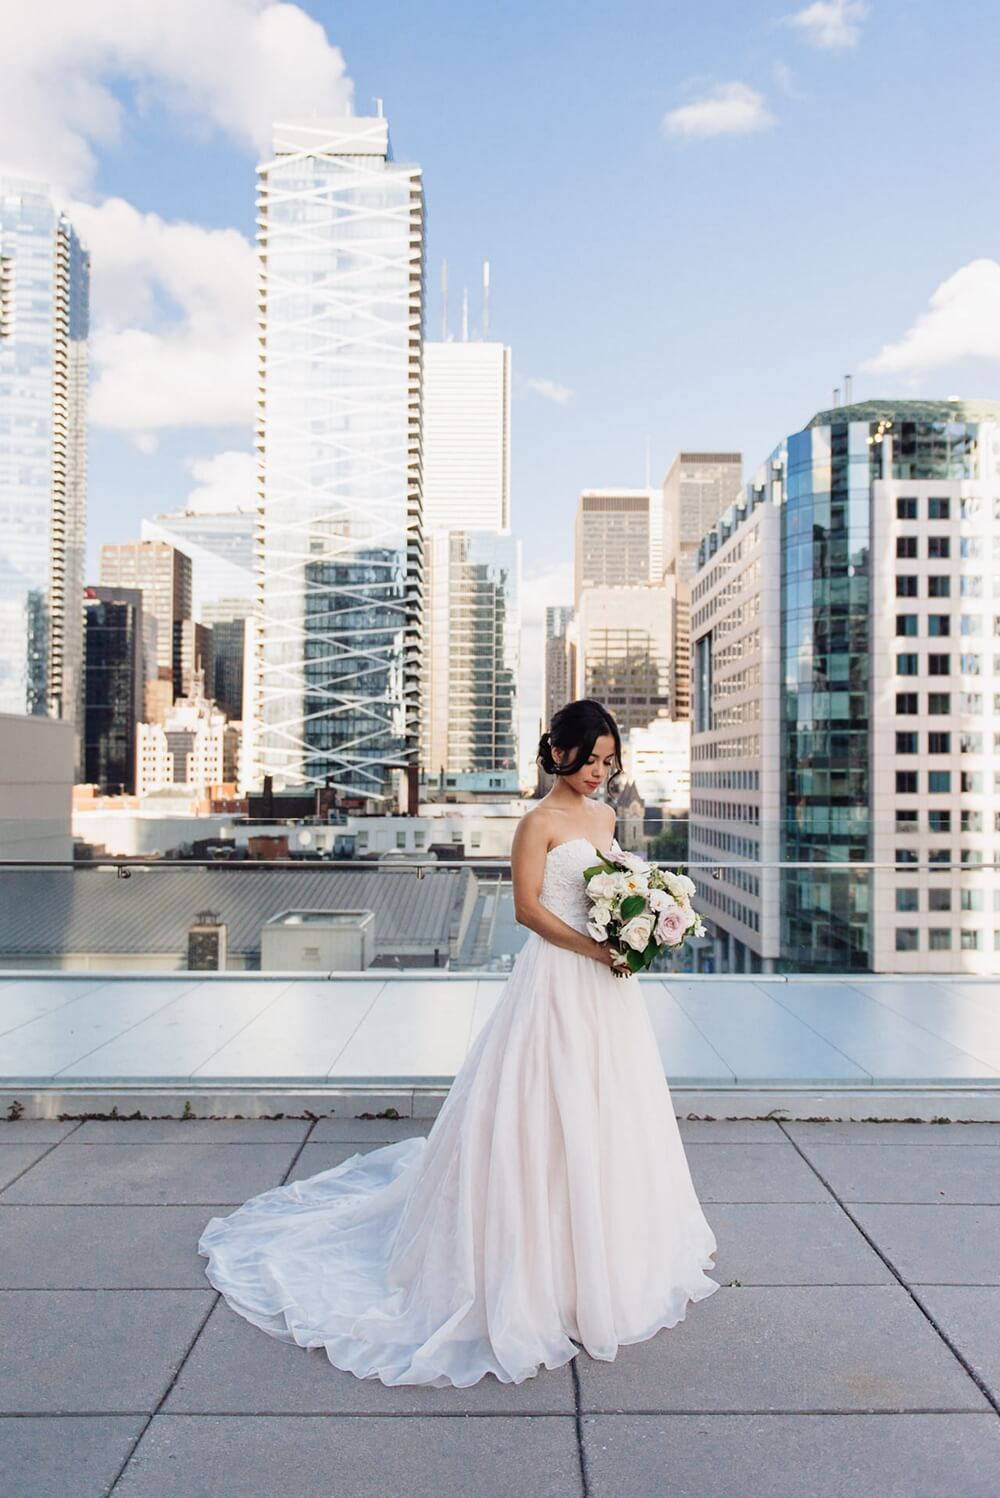 Wedding at Malaparte - Oliver & Bonacini, Toronto, Ontario, EightyFifth Street Photography, 5